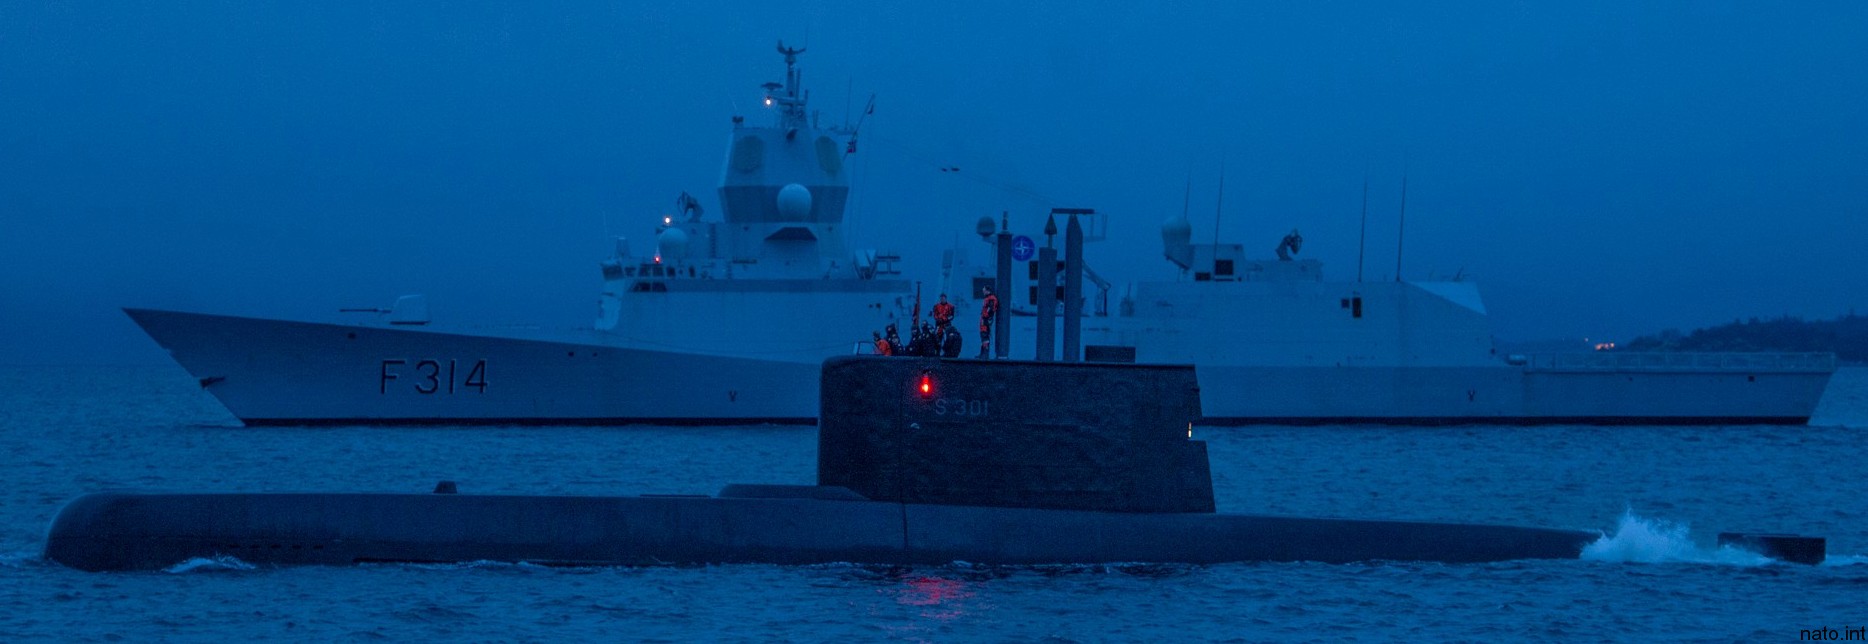 s-301 hnoms knm utsira ula class submarine type 210 attack ssk undervannsbåt royal norwegian navy sjøforsvaret 06